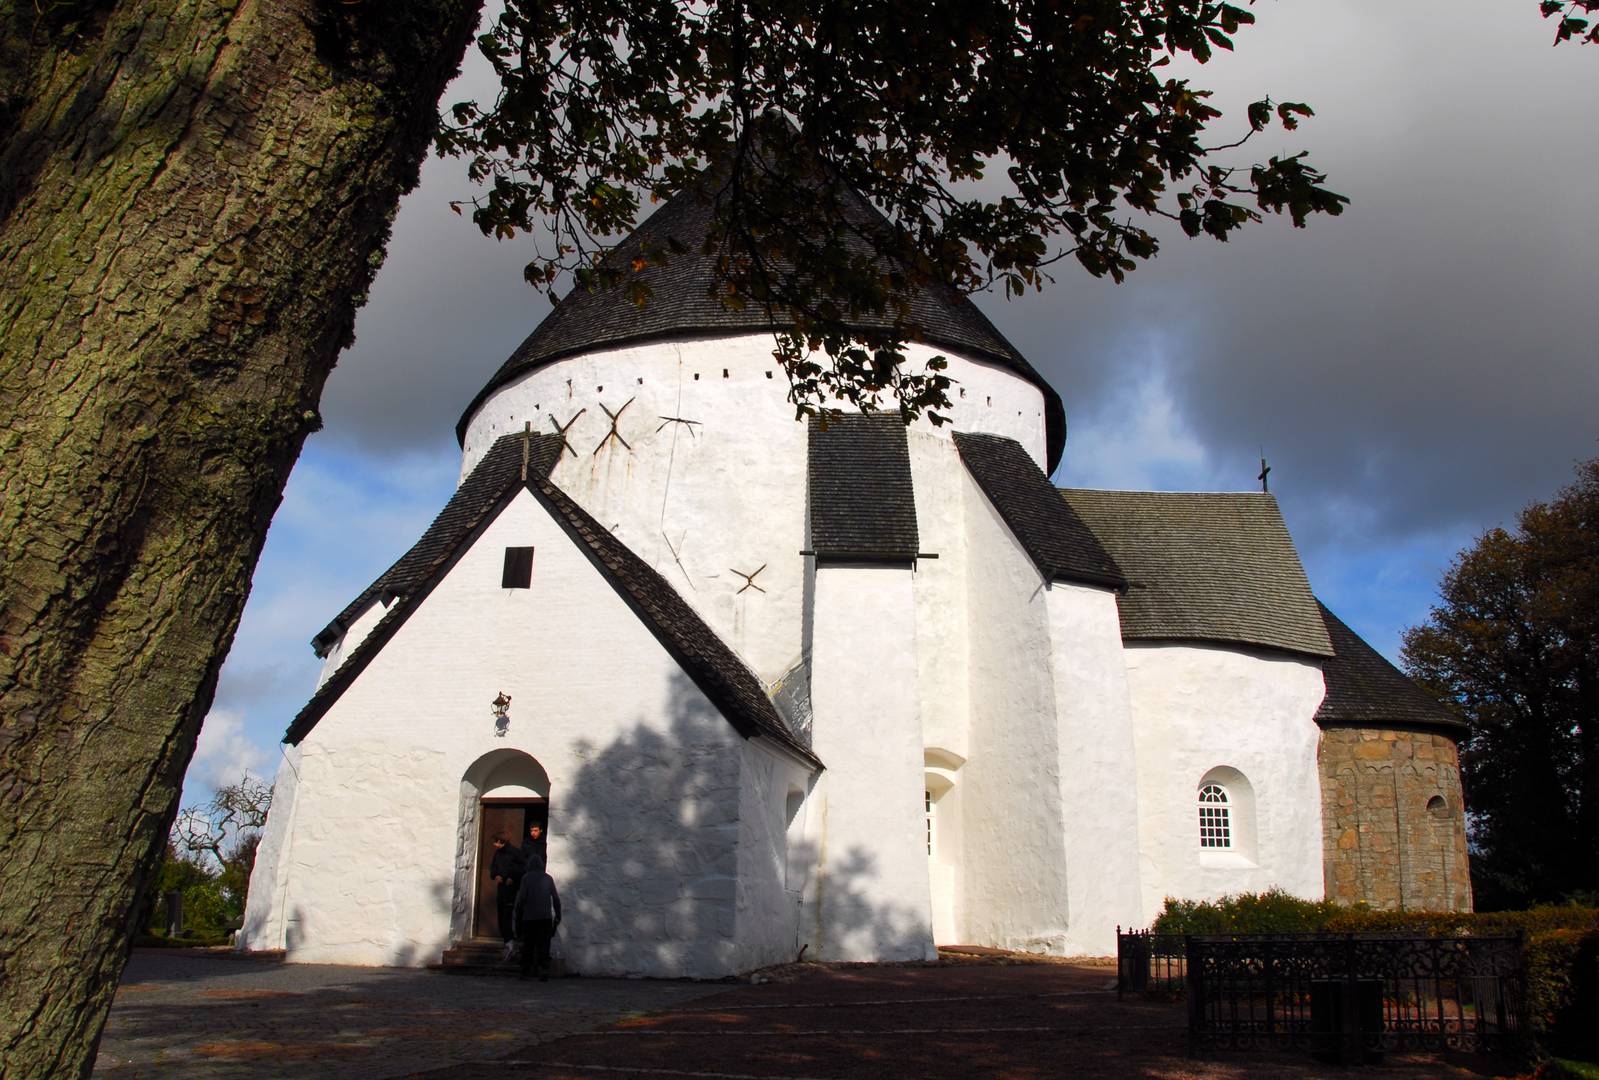 Osterlars Kirke auf Bornholm, Dänemark